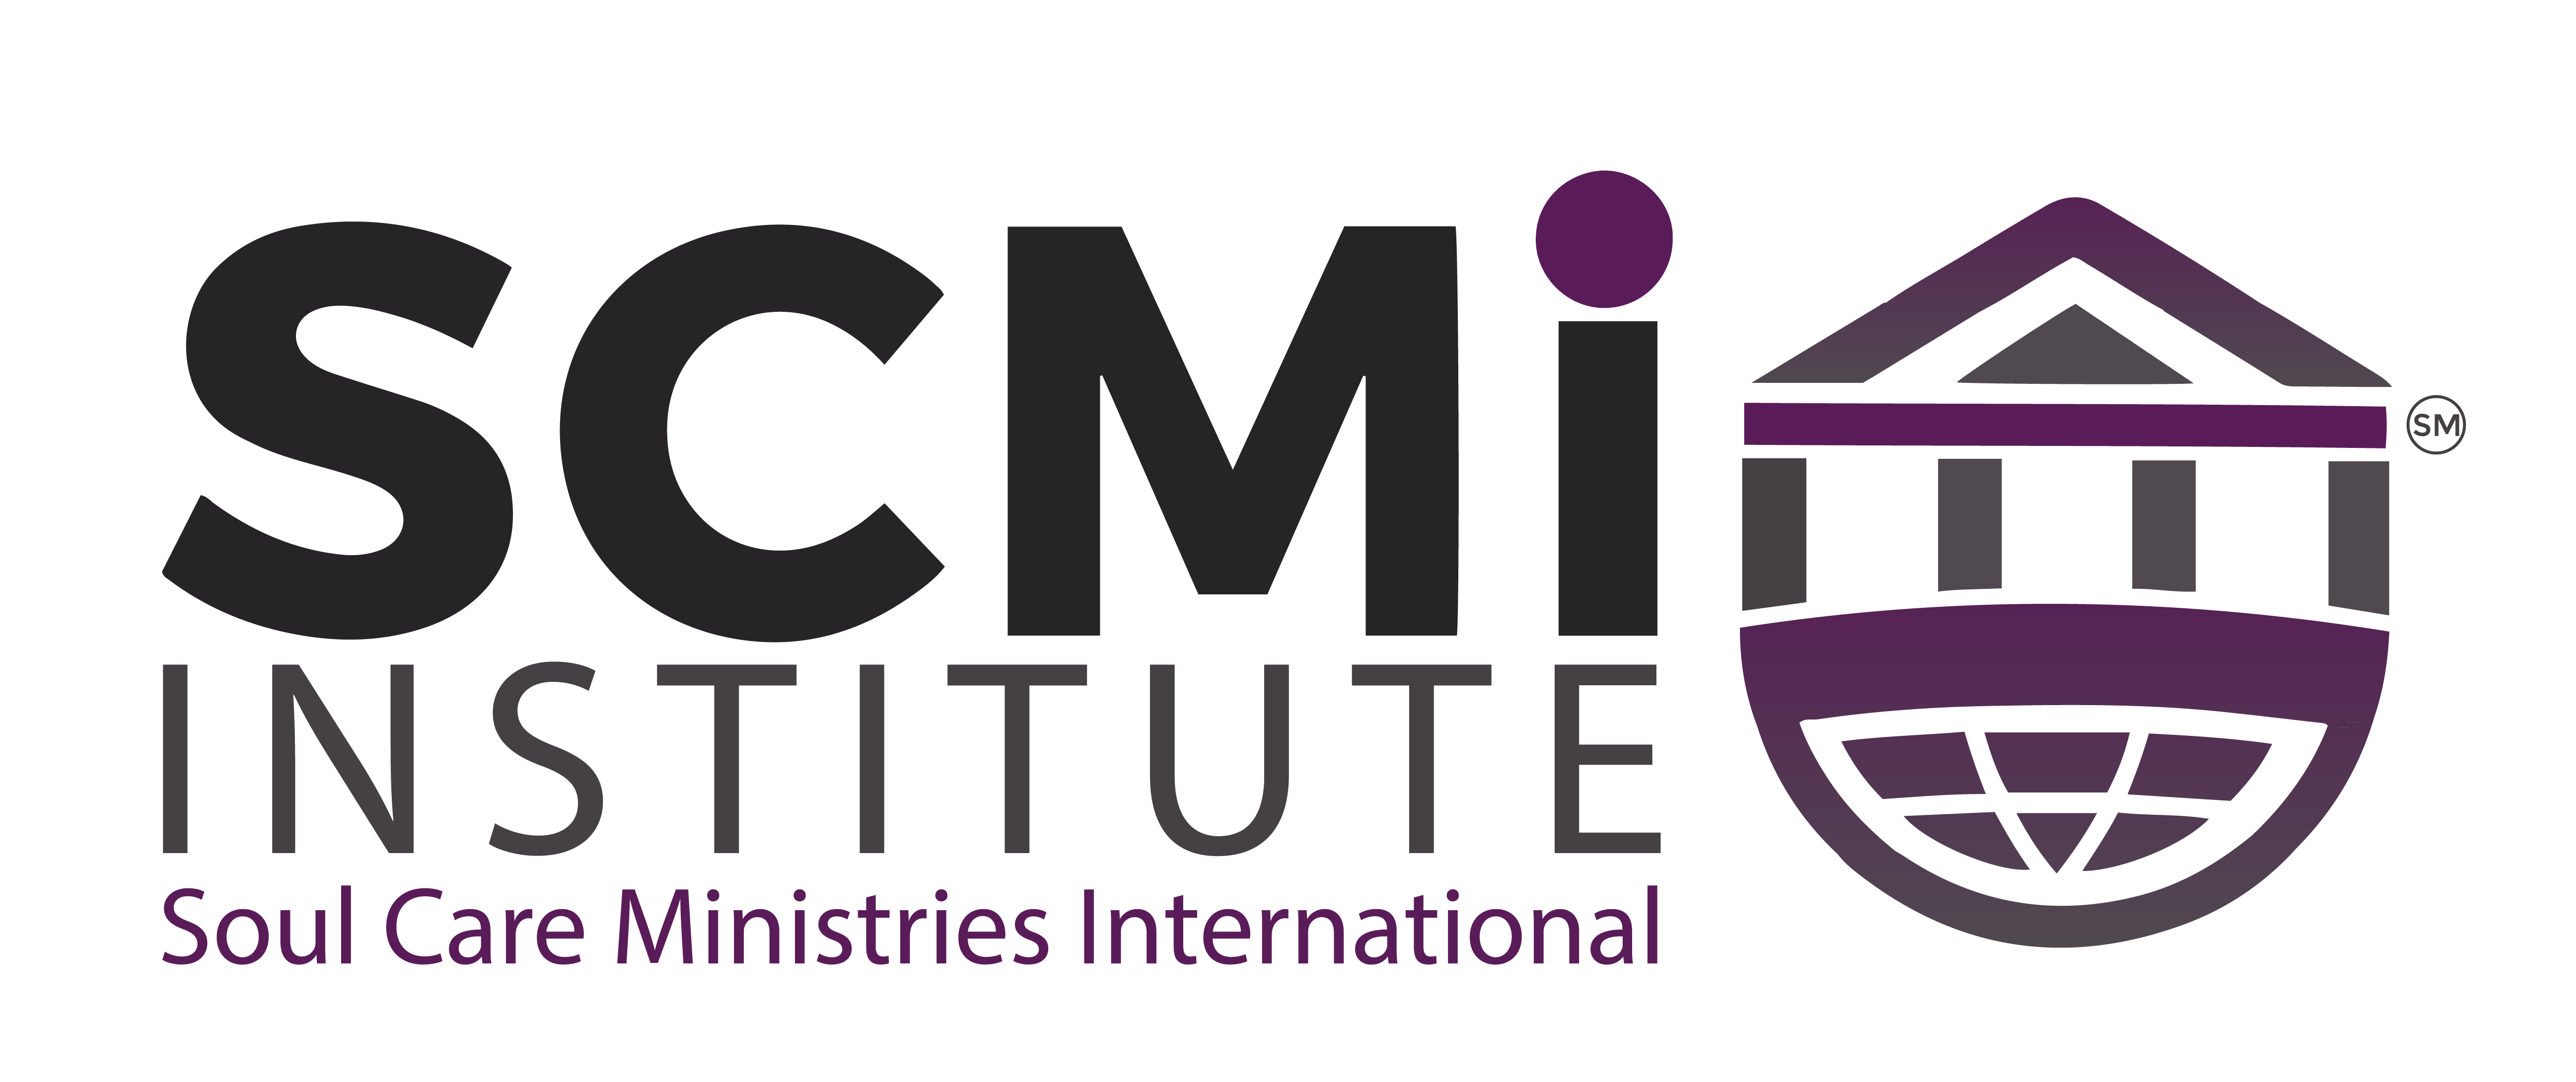 Soul Care Ministries International Institute